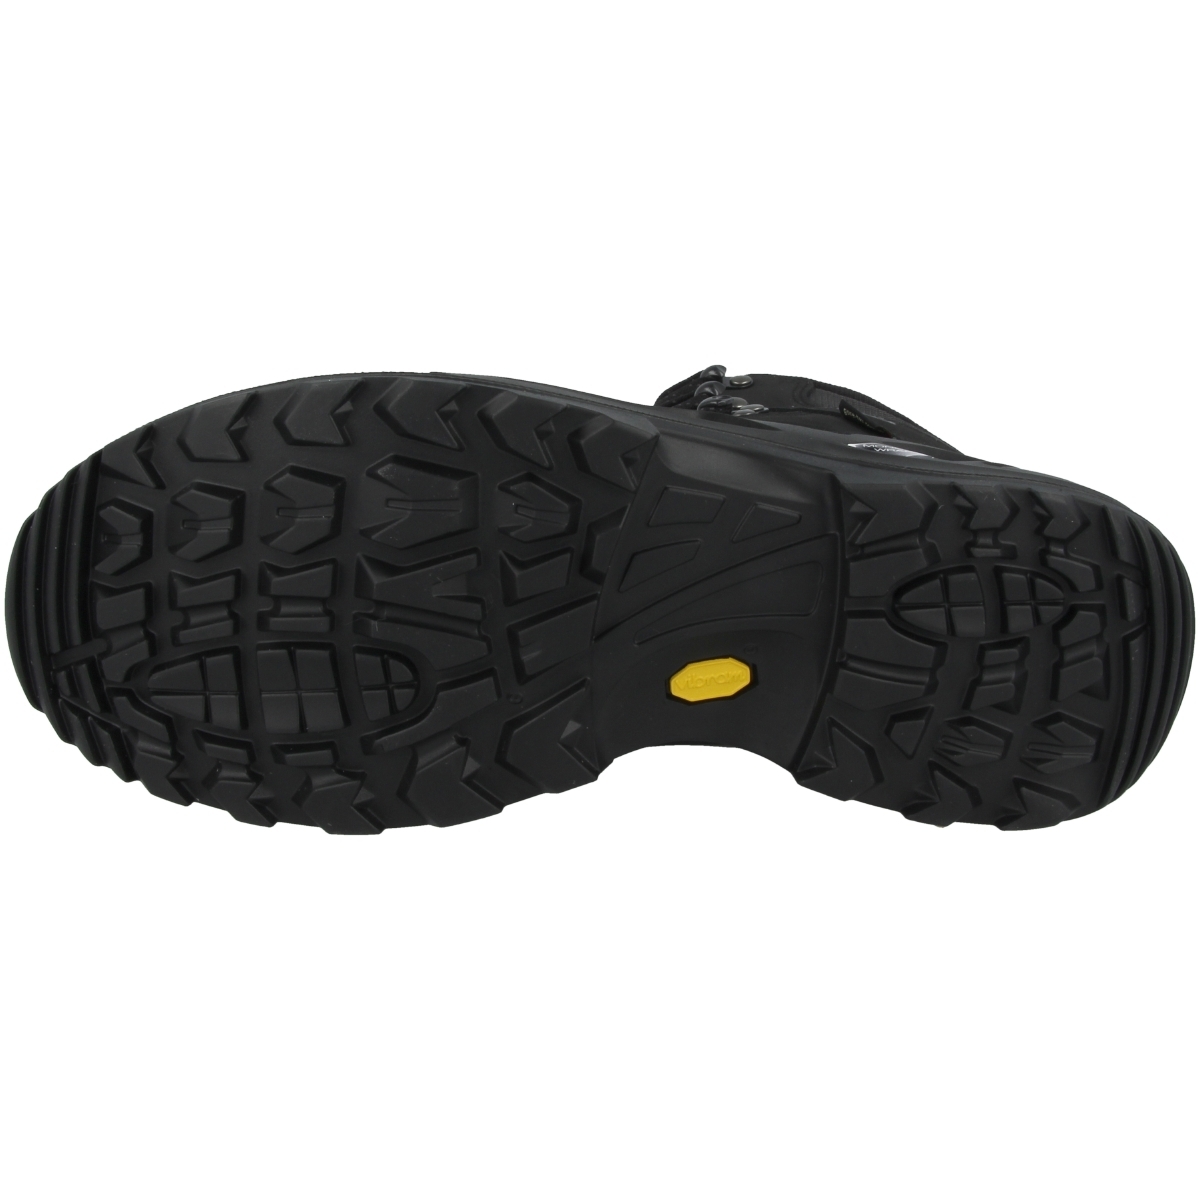 LOWA Renegade GTX Mid Outdoor Schuhe schwarz